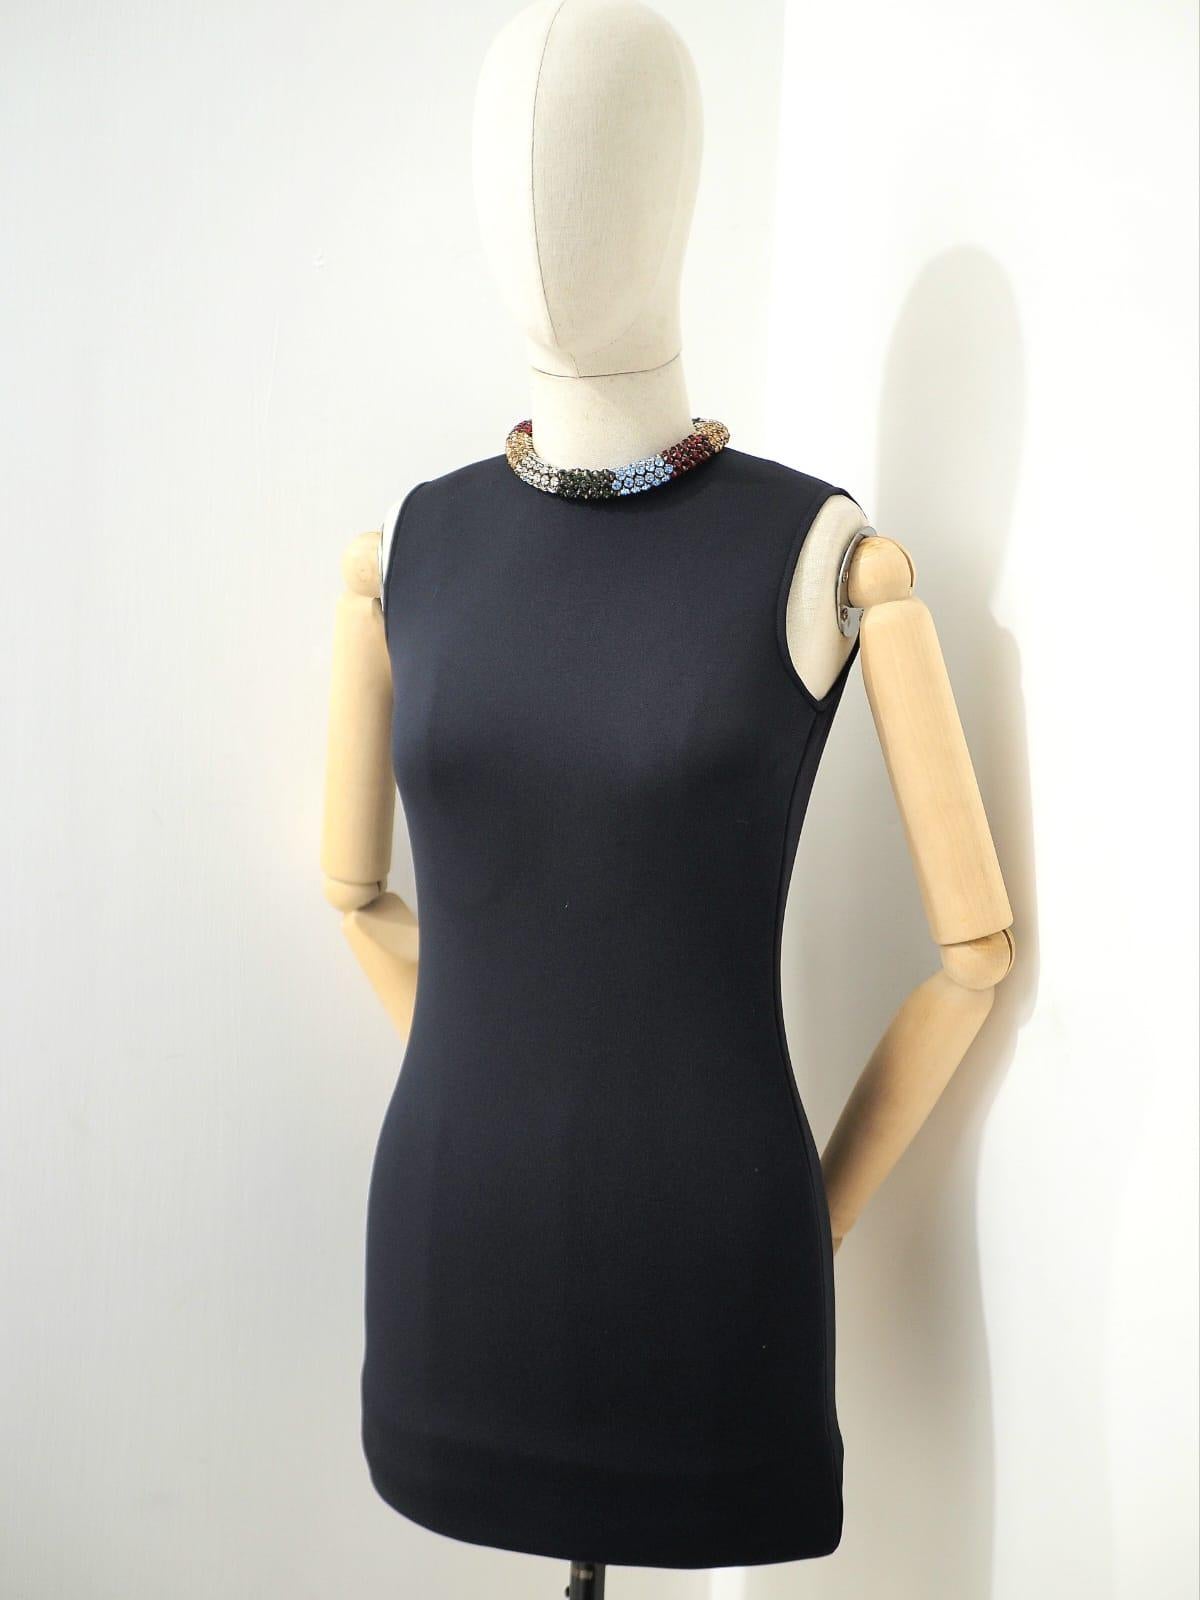 Alexander McQueen black with multicolour swarovski stones necklace dress For Sale 4